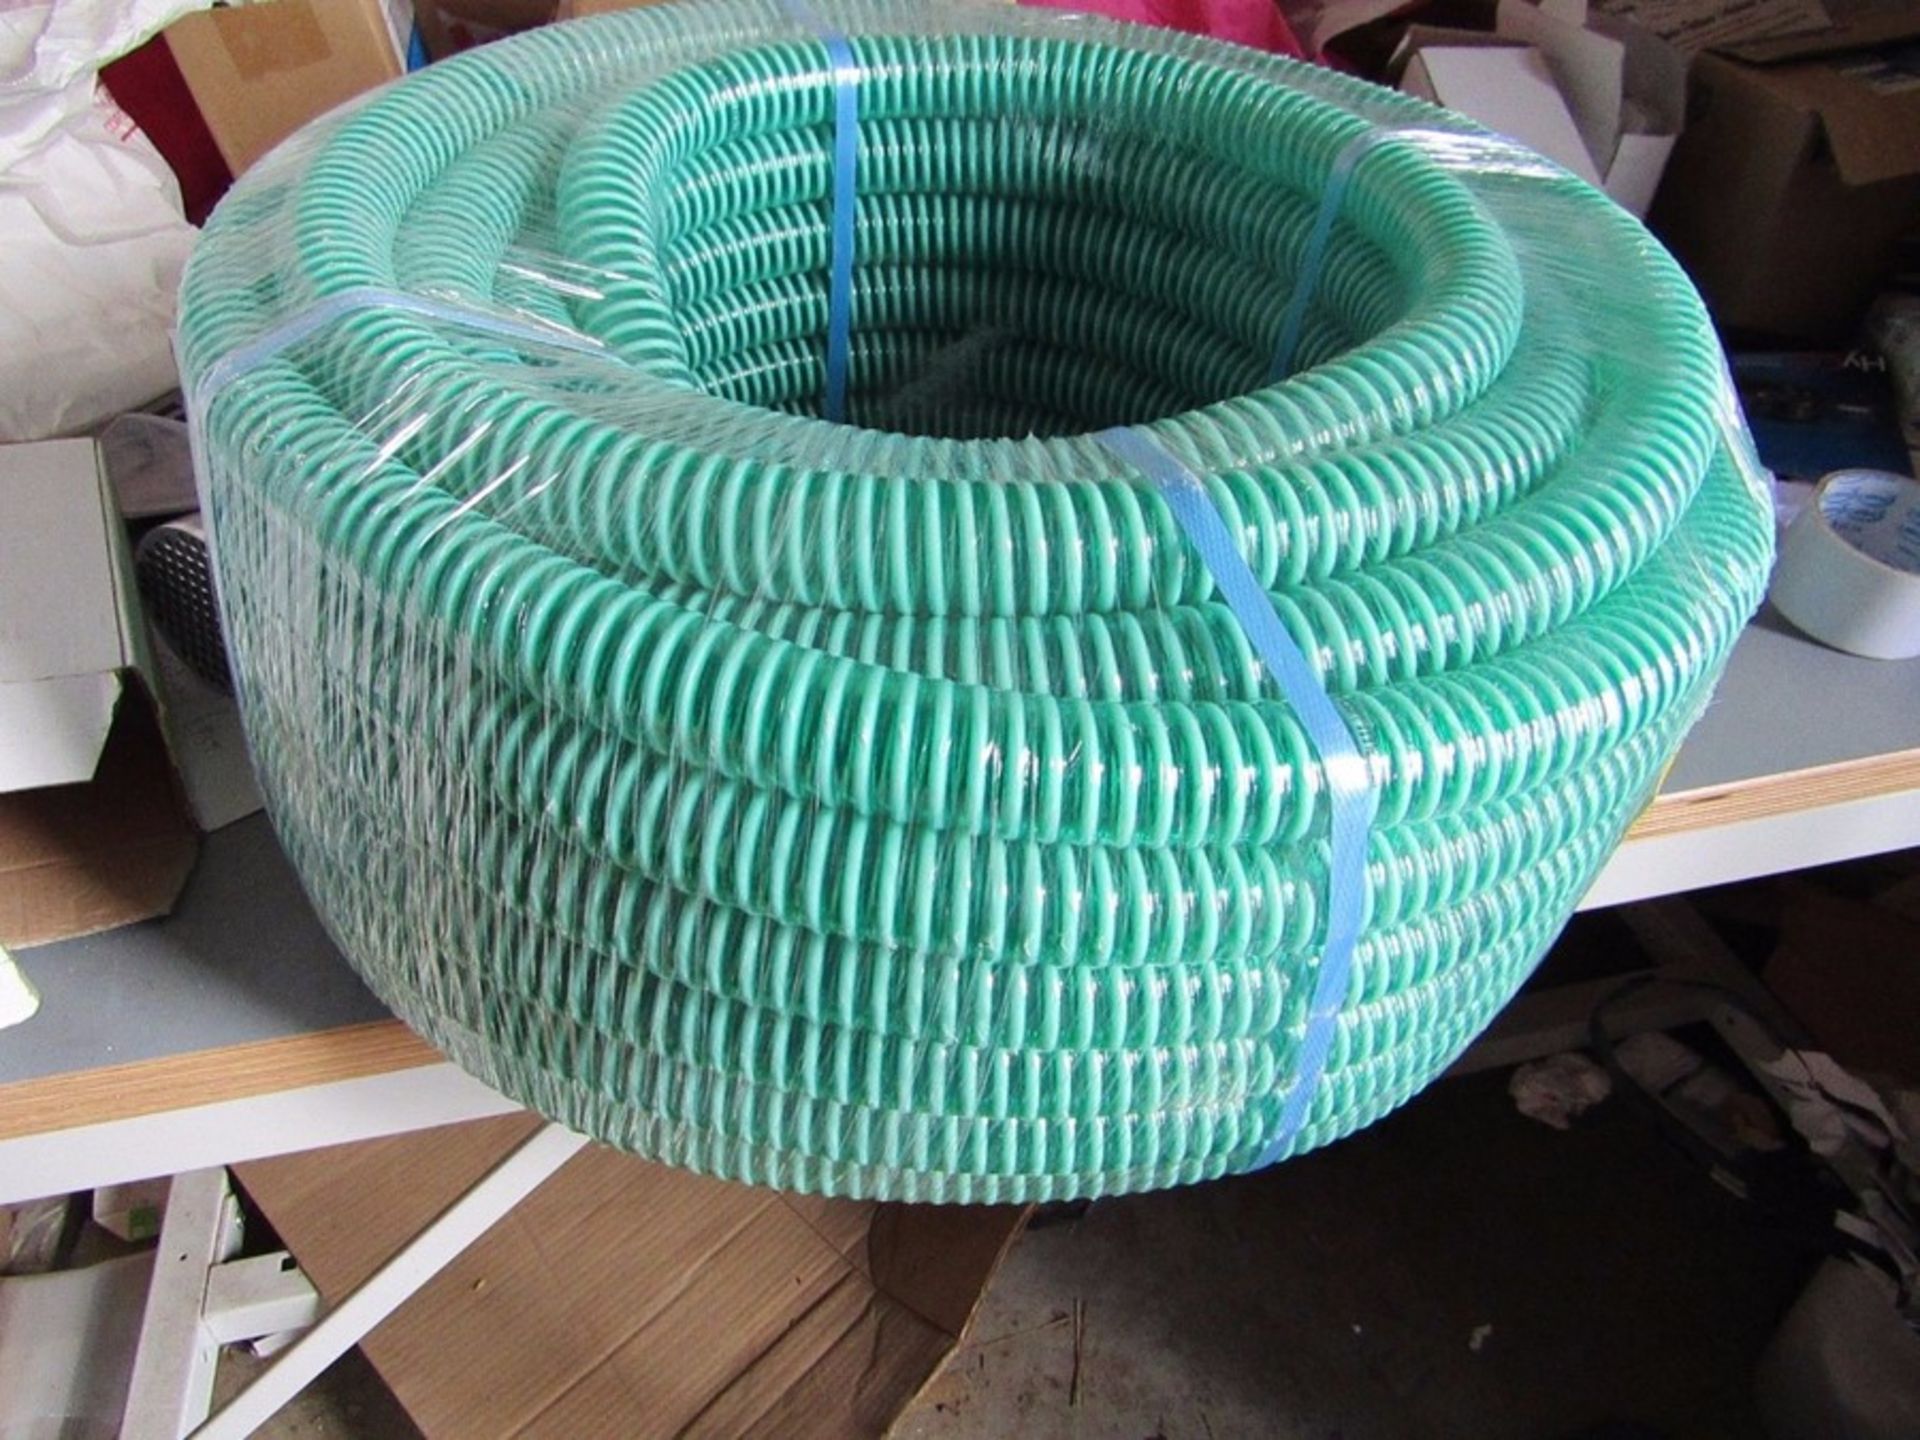 30m Long Green PVC Ducting Reinforced Tubing, 31.6mm od / 25mm id -1005 3621818 - Image 2 of 2